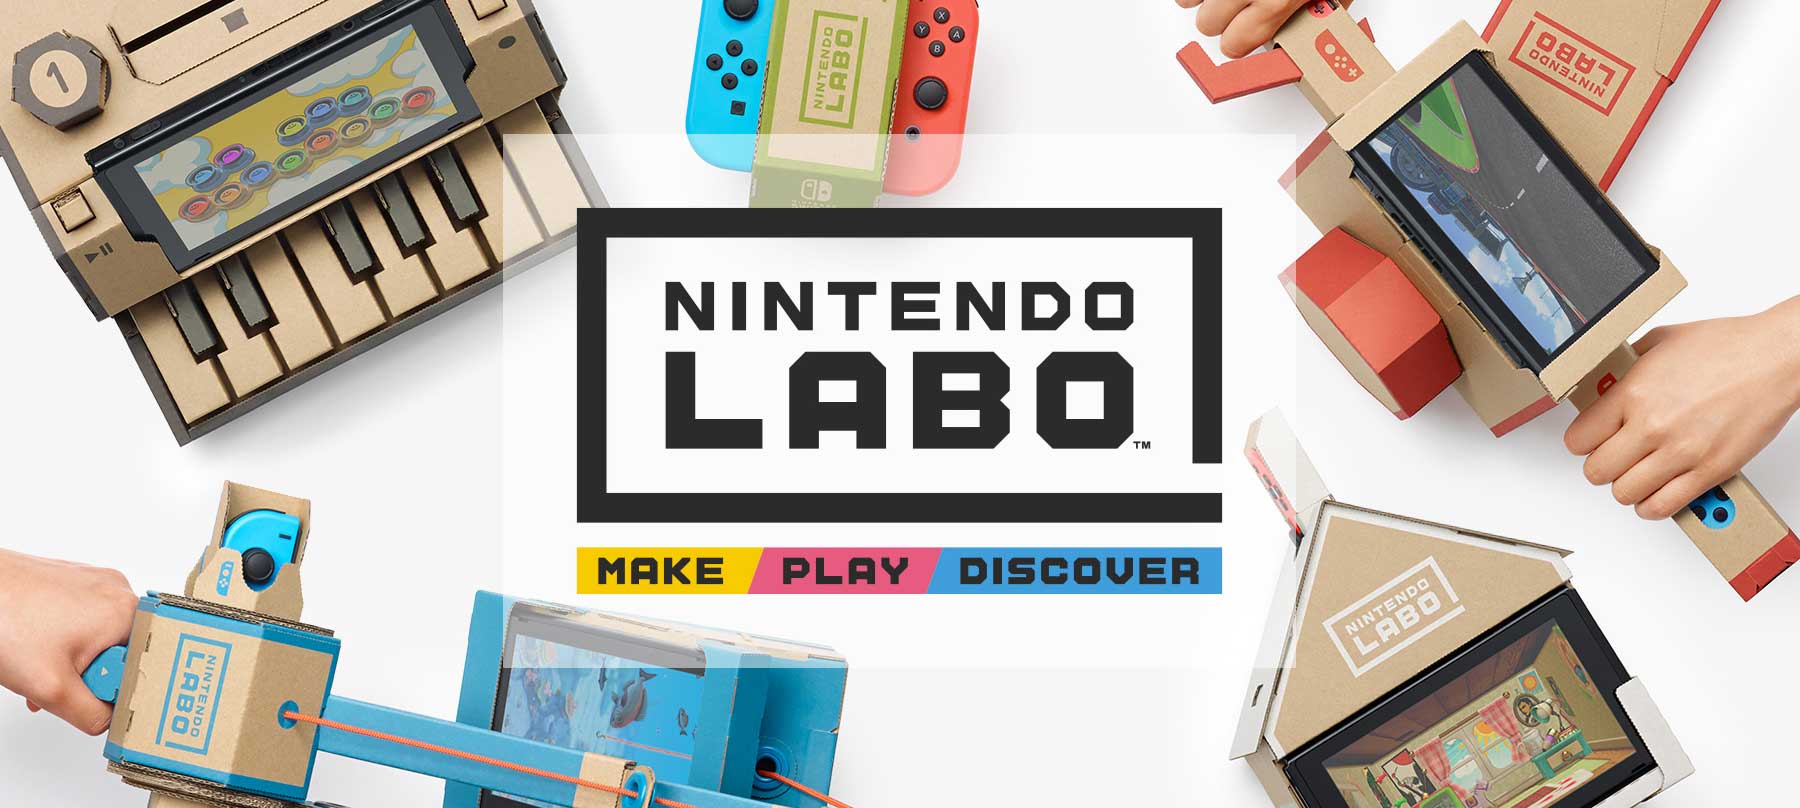 Nintendo Labo: Make, Play, Discover!